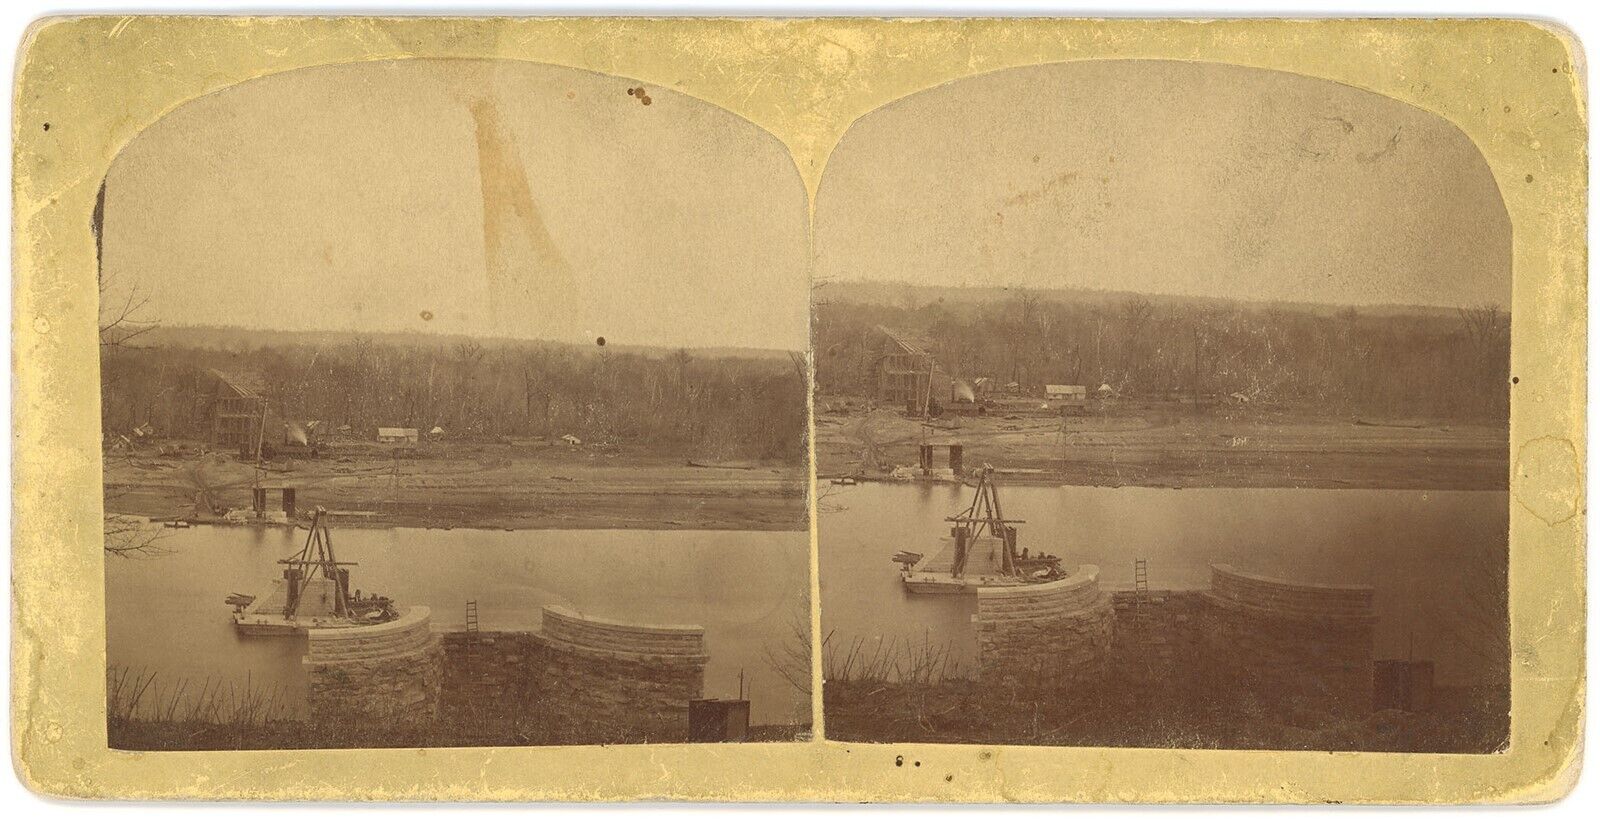 KANSAS SV - Leavenworth - Missouri River - EE Henry 1880s